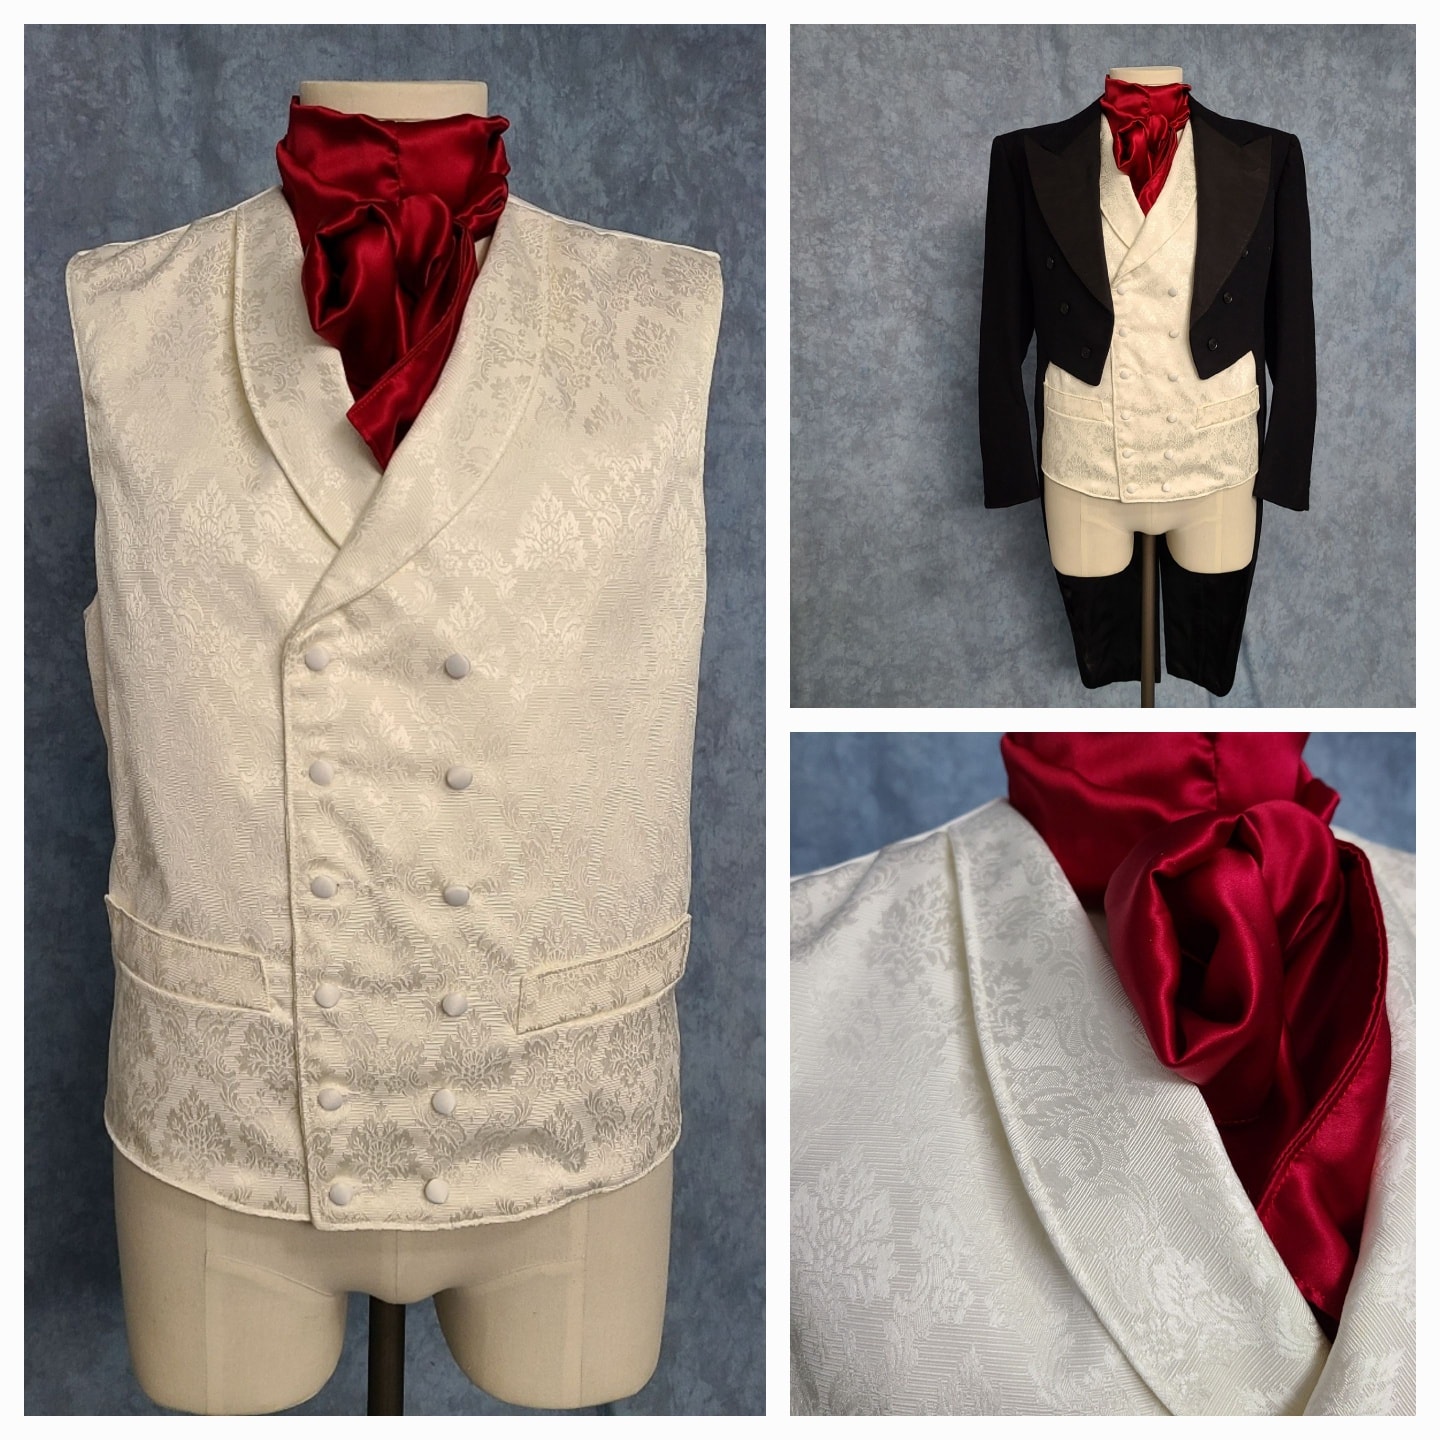 Bridgerton inspired custom waistcoat and cravat